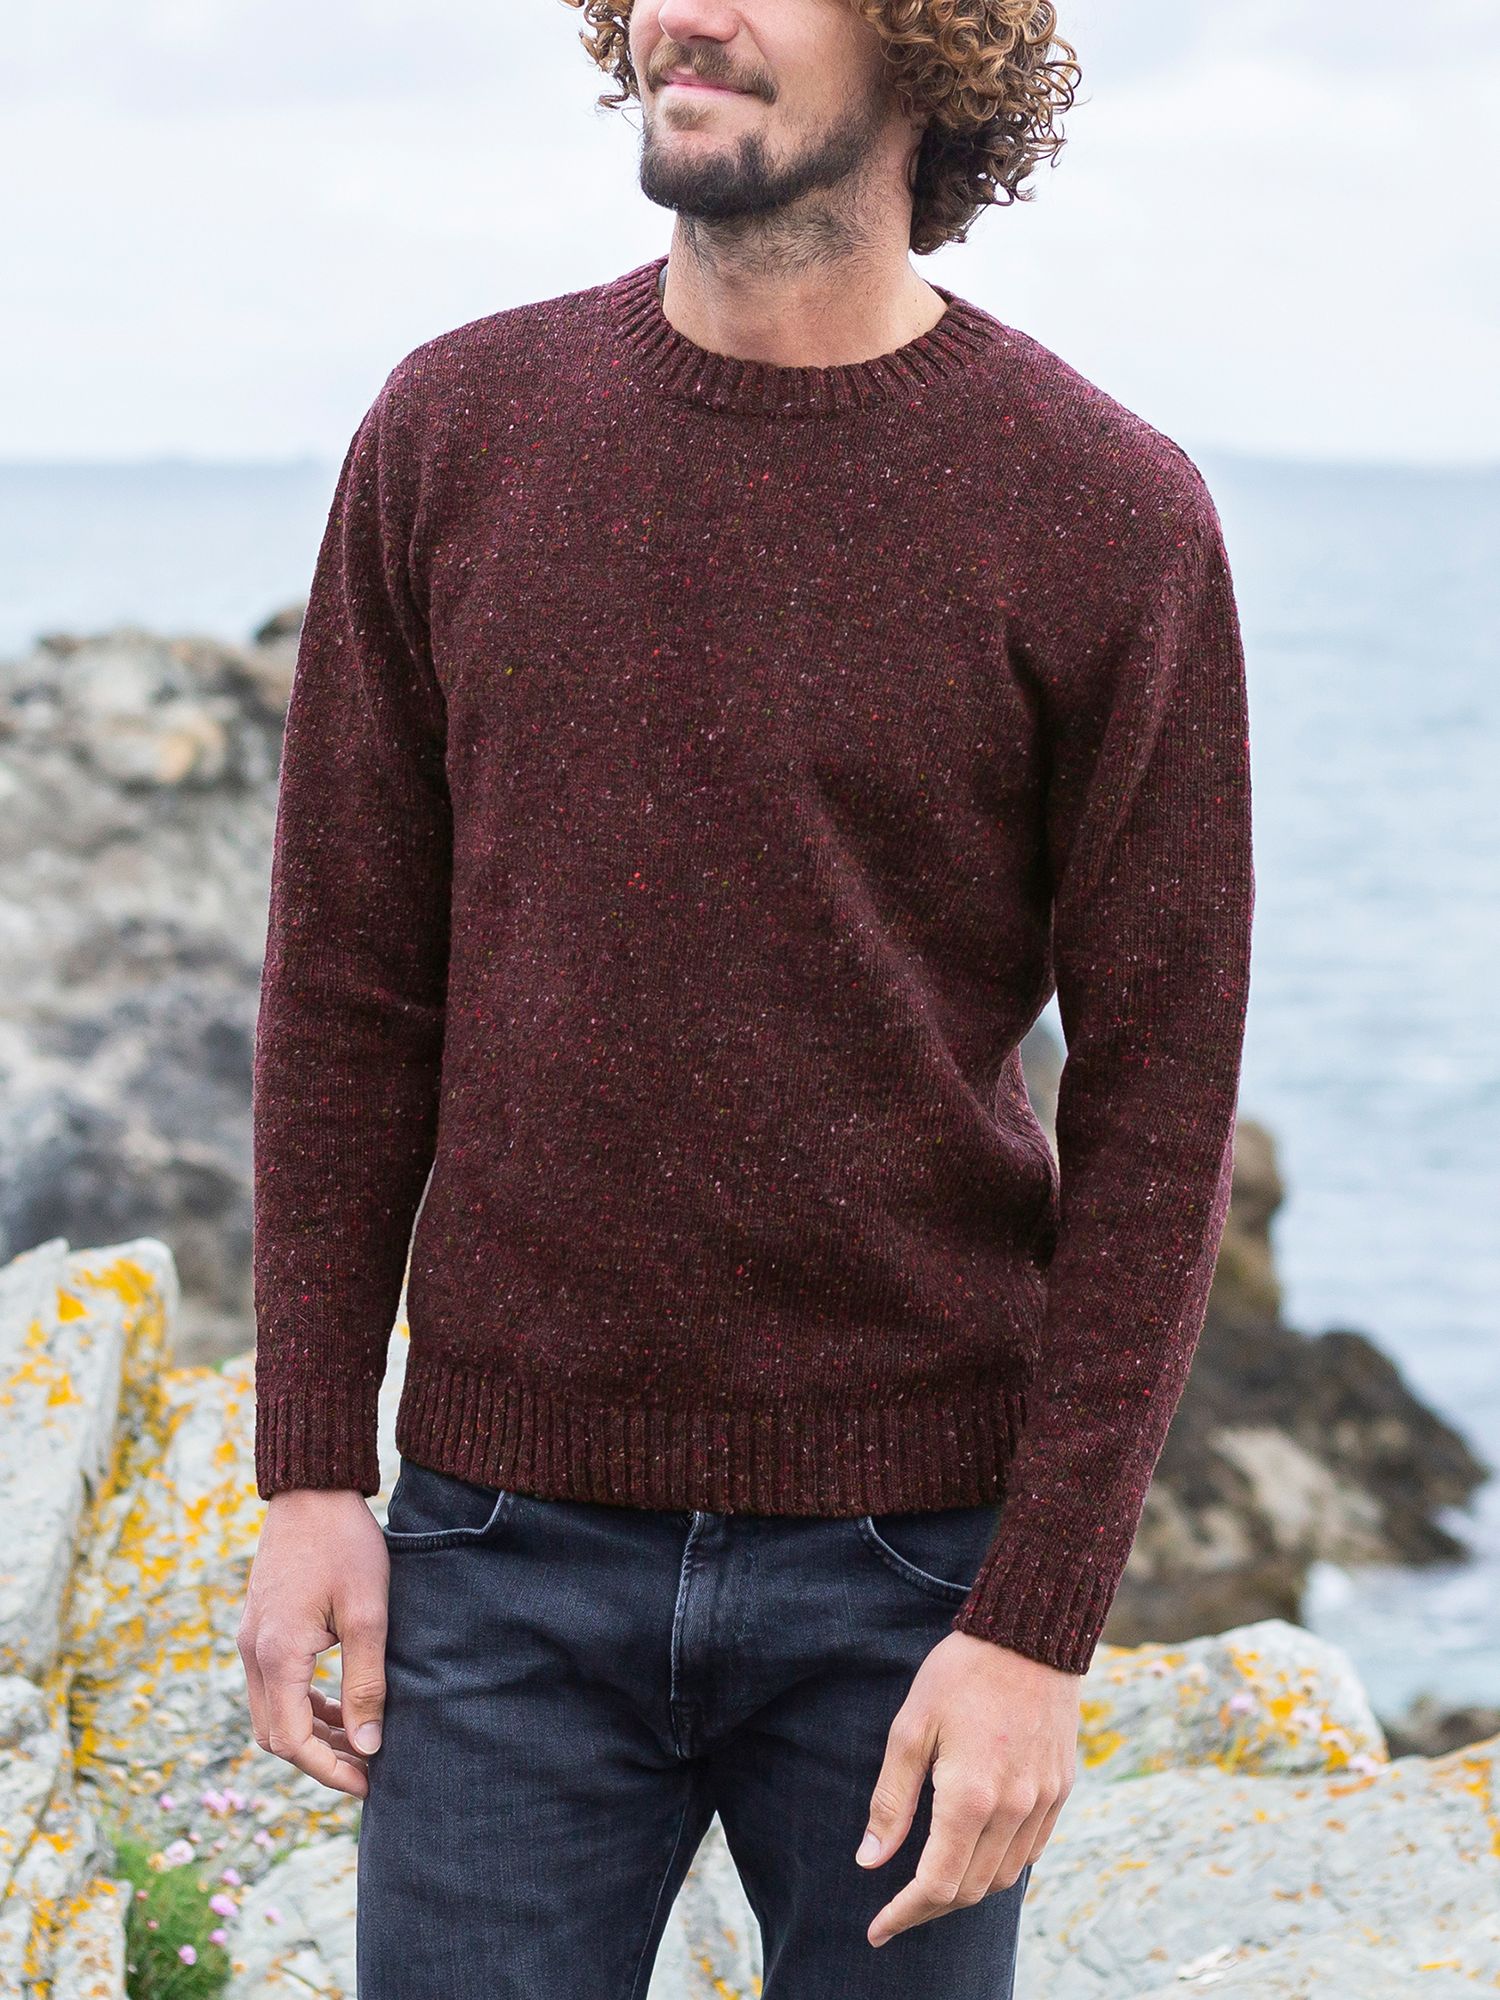 Celtic & Co. Men's Donegal Crew Neck Sweater - Indigo - X-Large